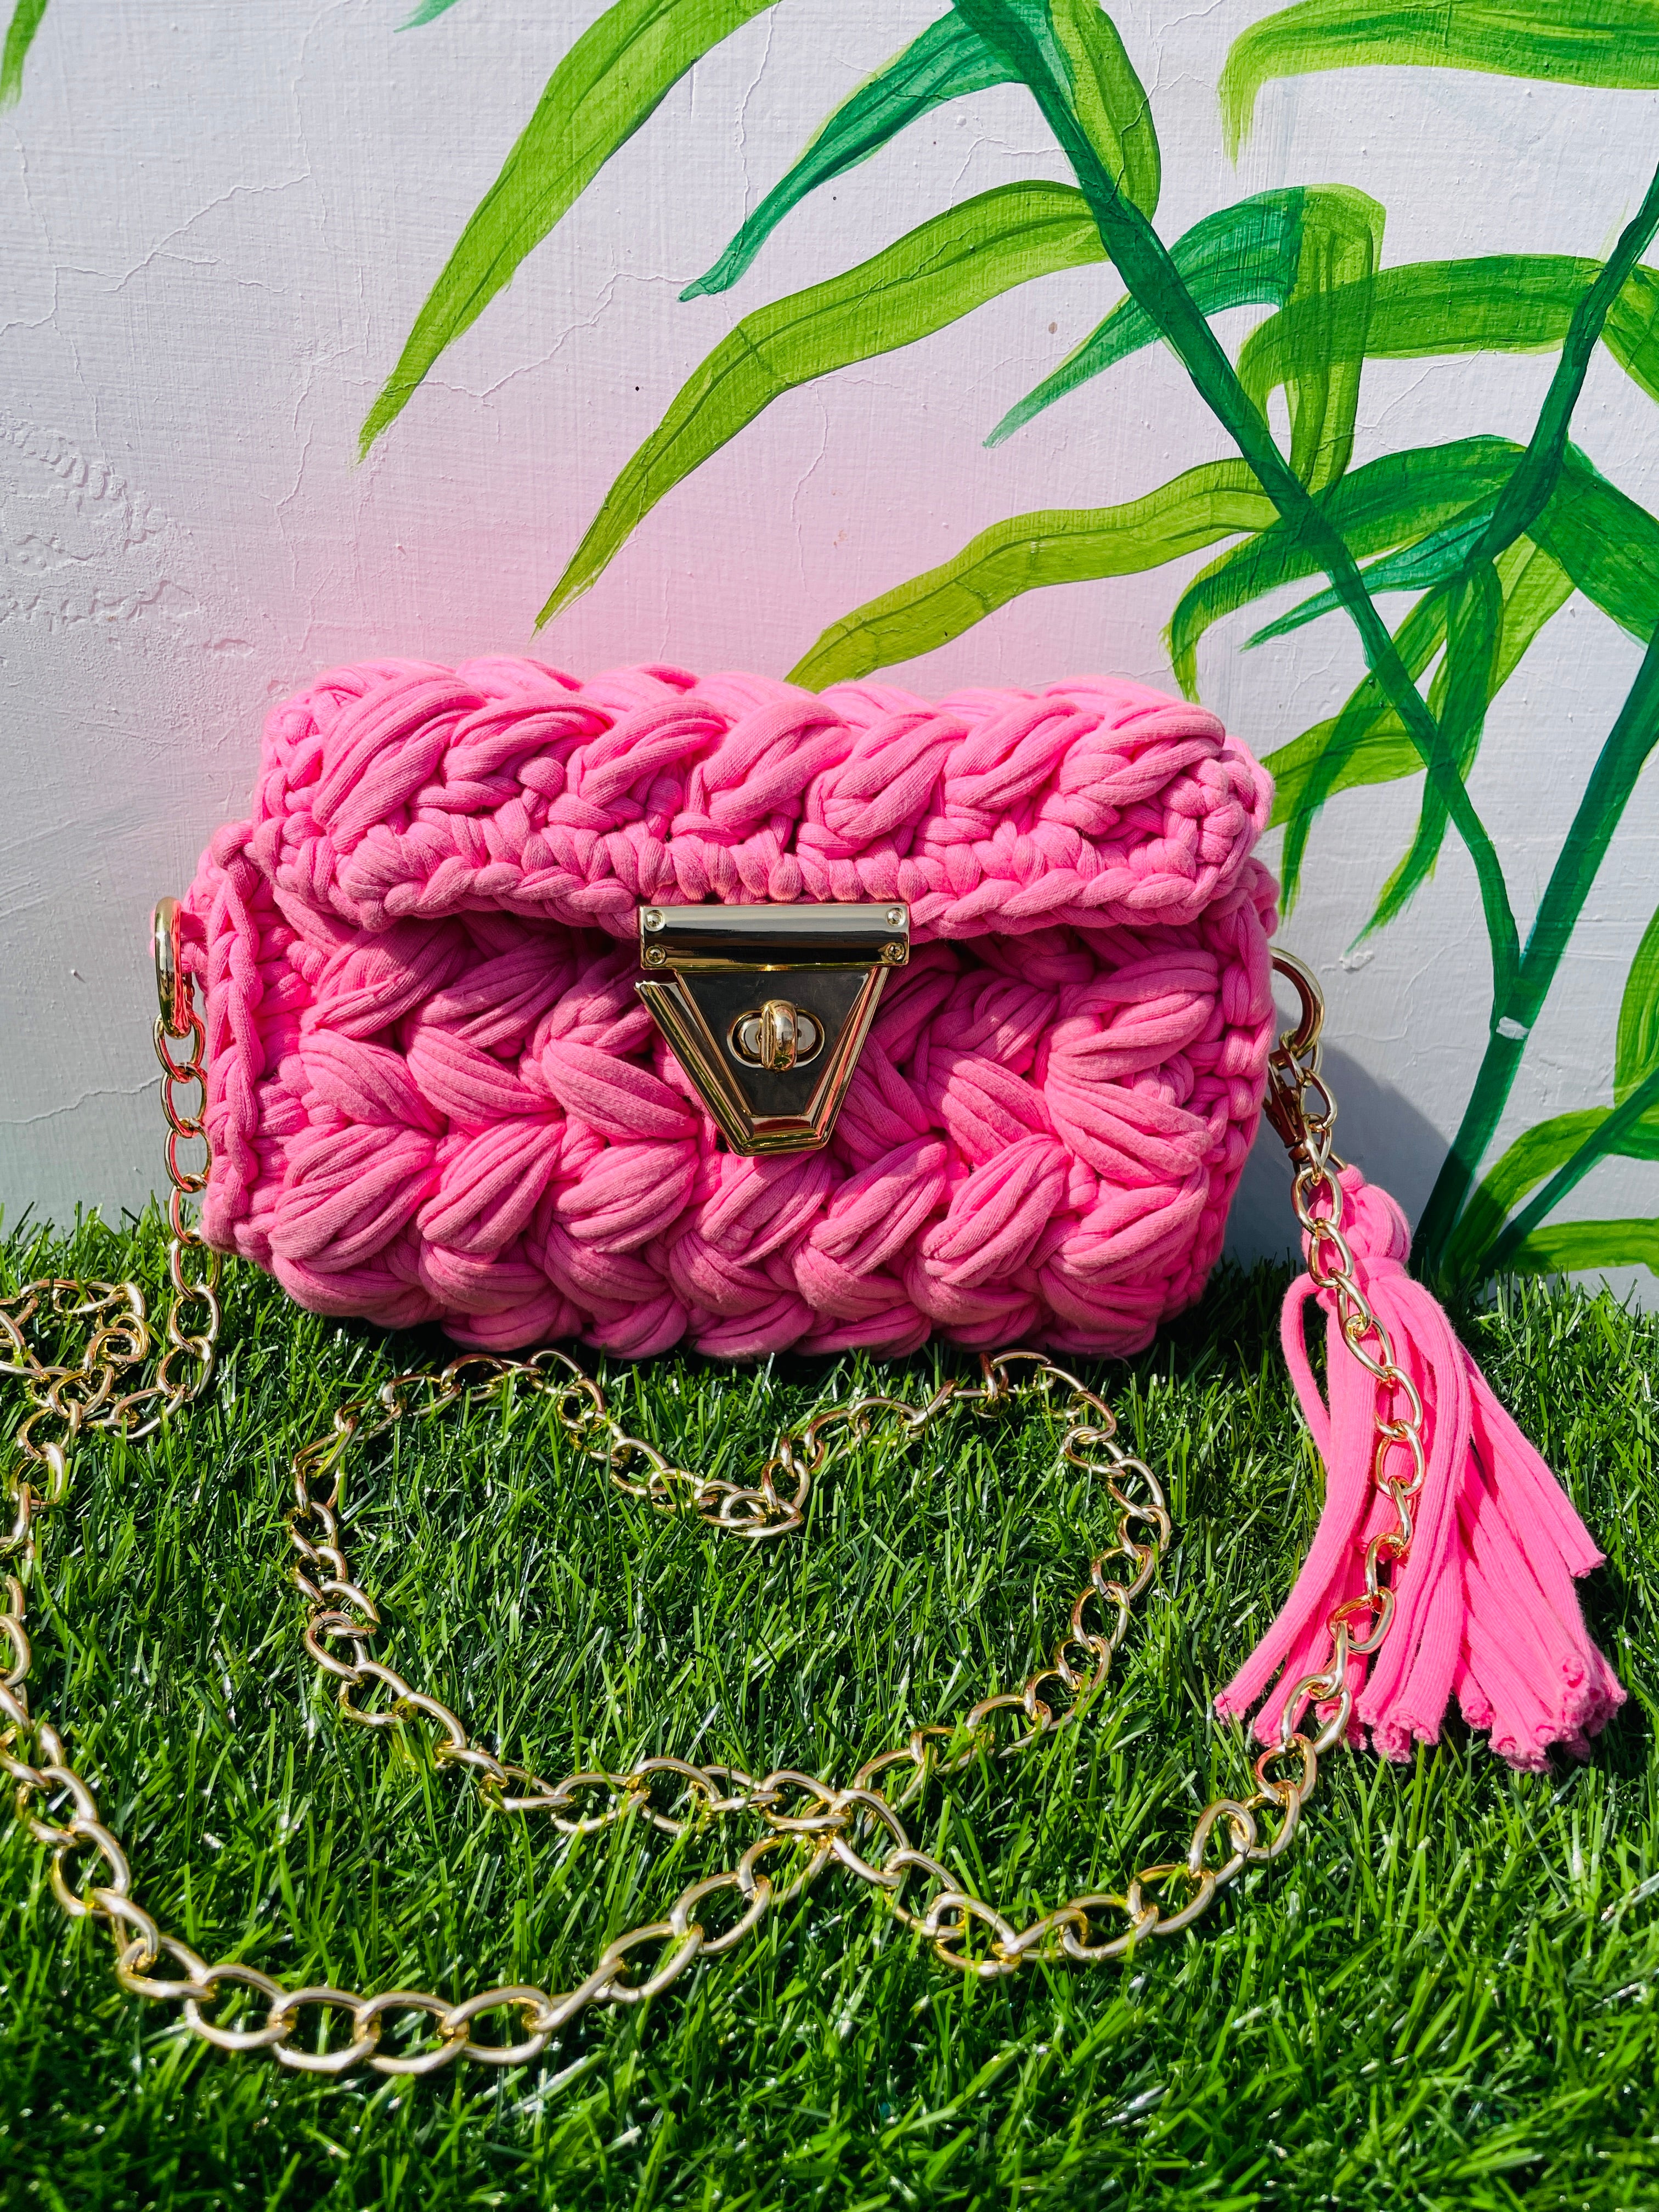 Boho Crochet Bags – how to make your own OOAK bag – MotherBunch Crochet